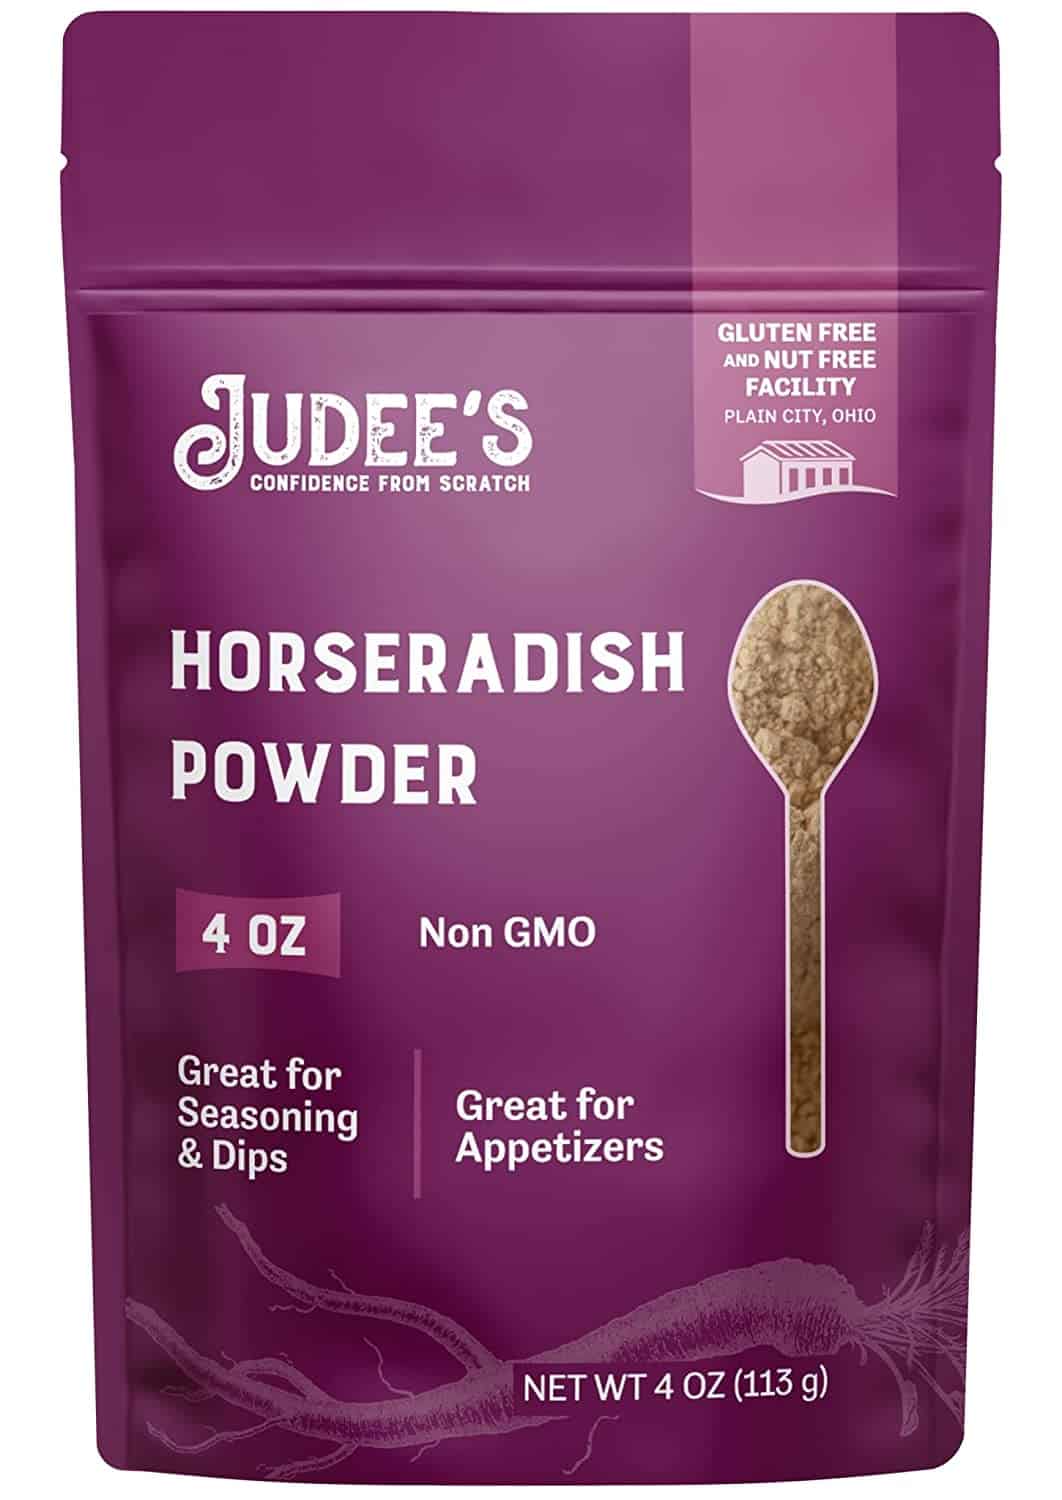 Horseradish powder as a substitute for mustard powder